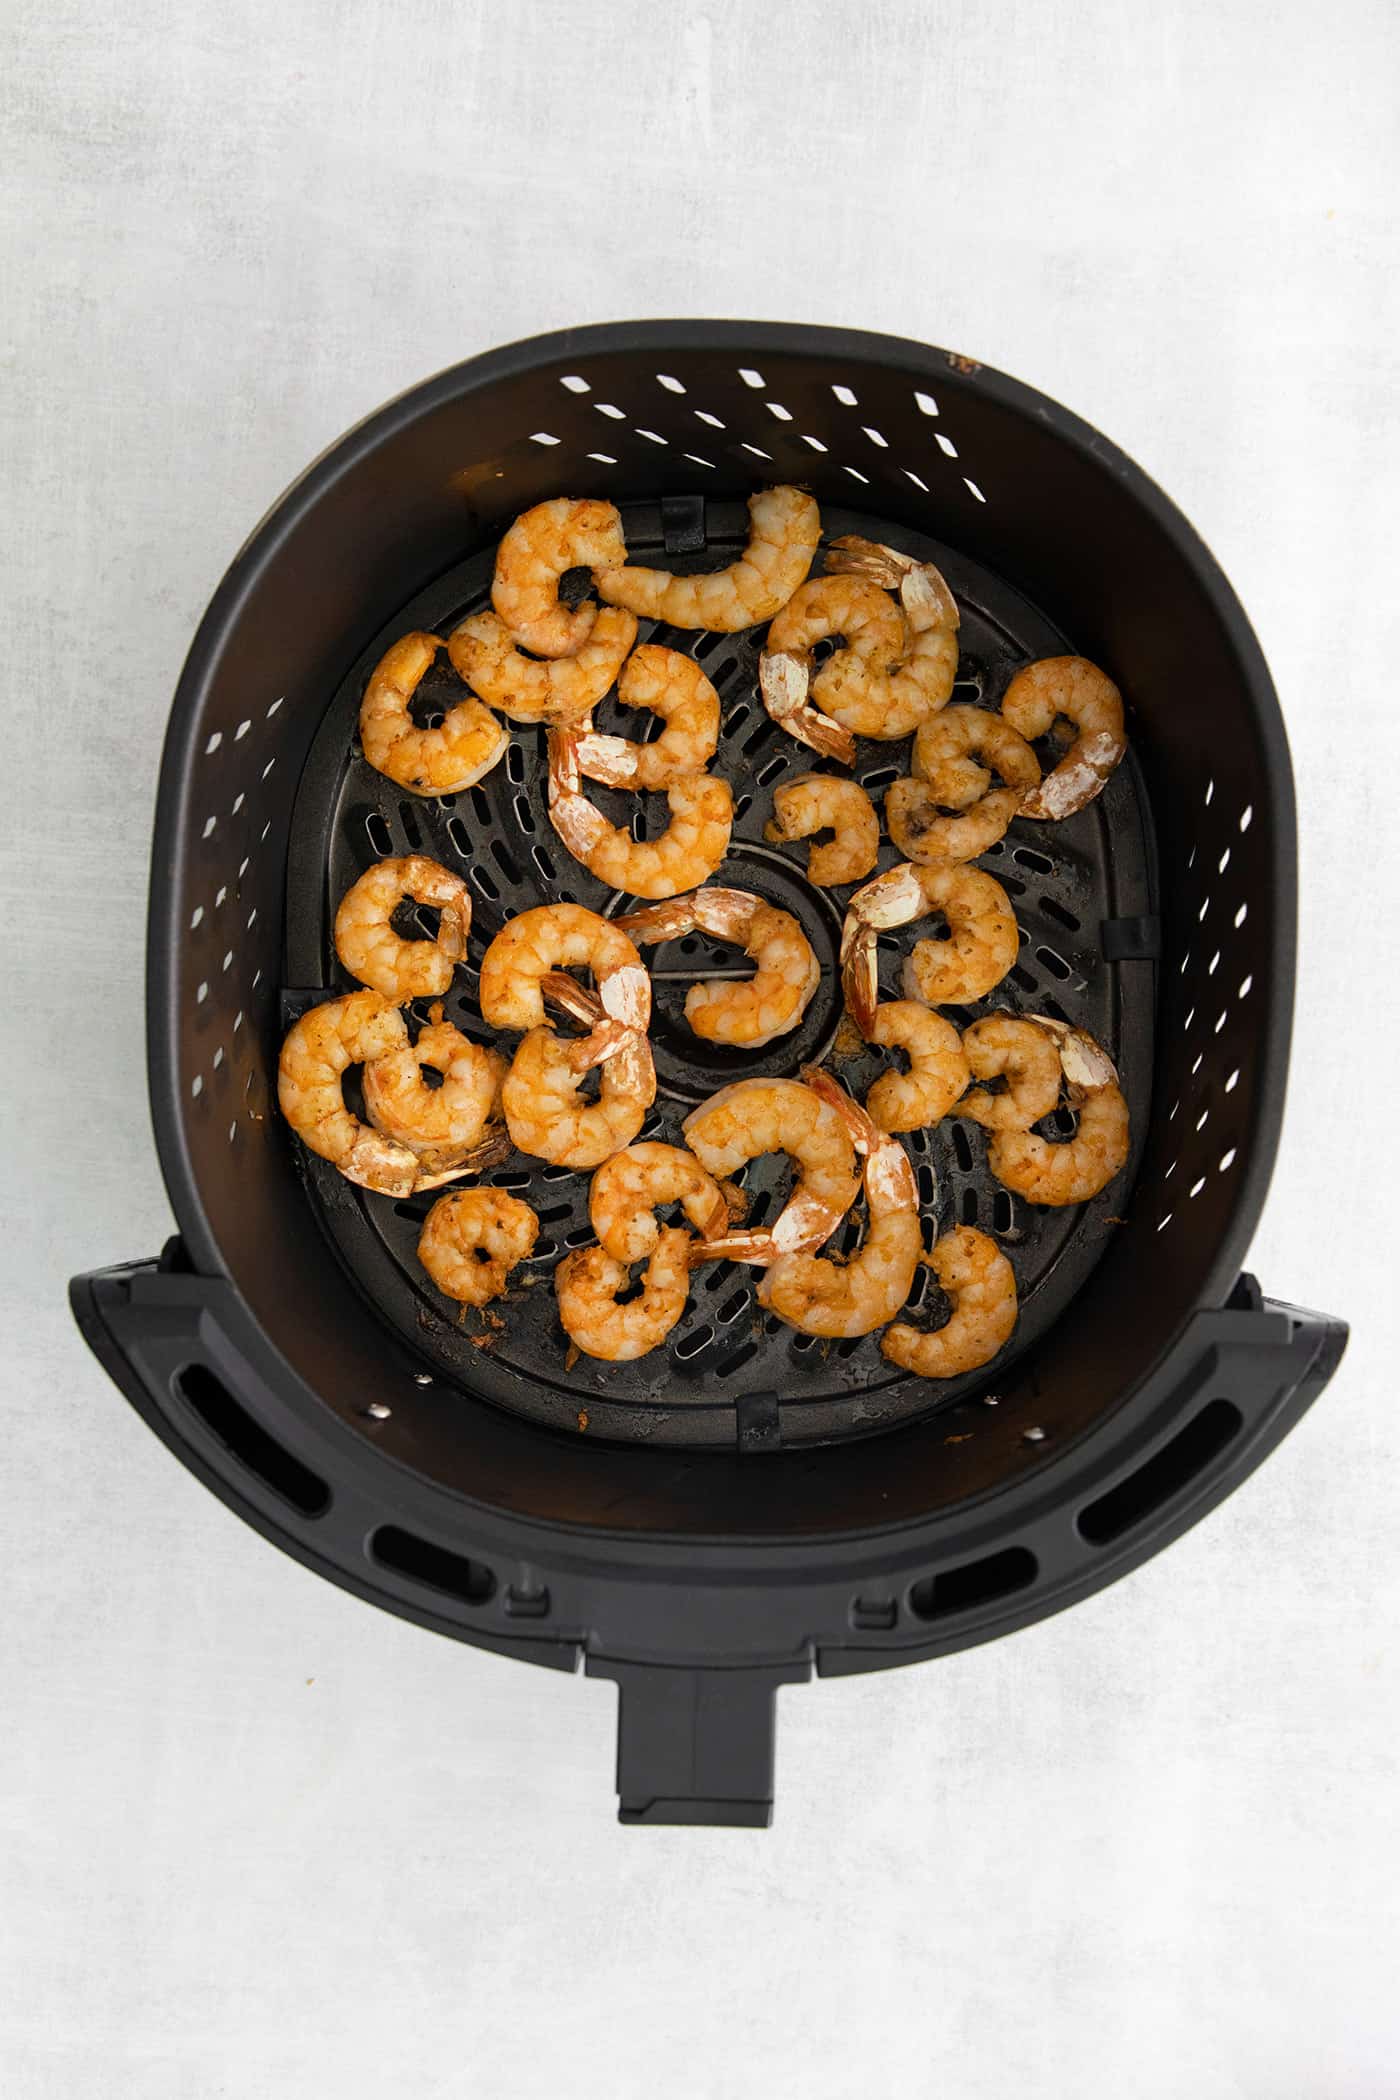 Seasoned shrimp in the air fryer